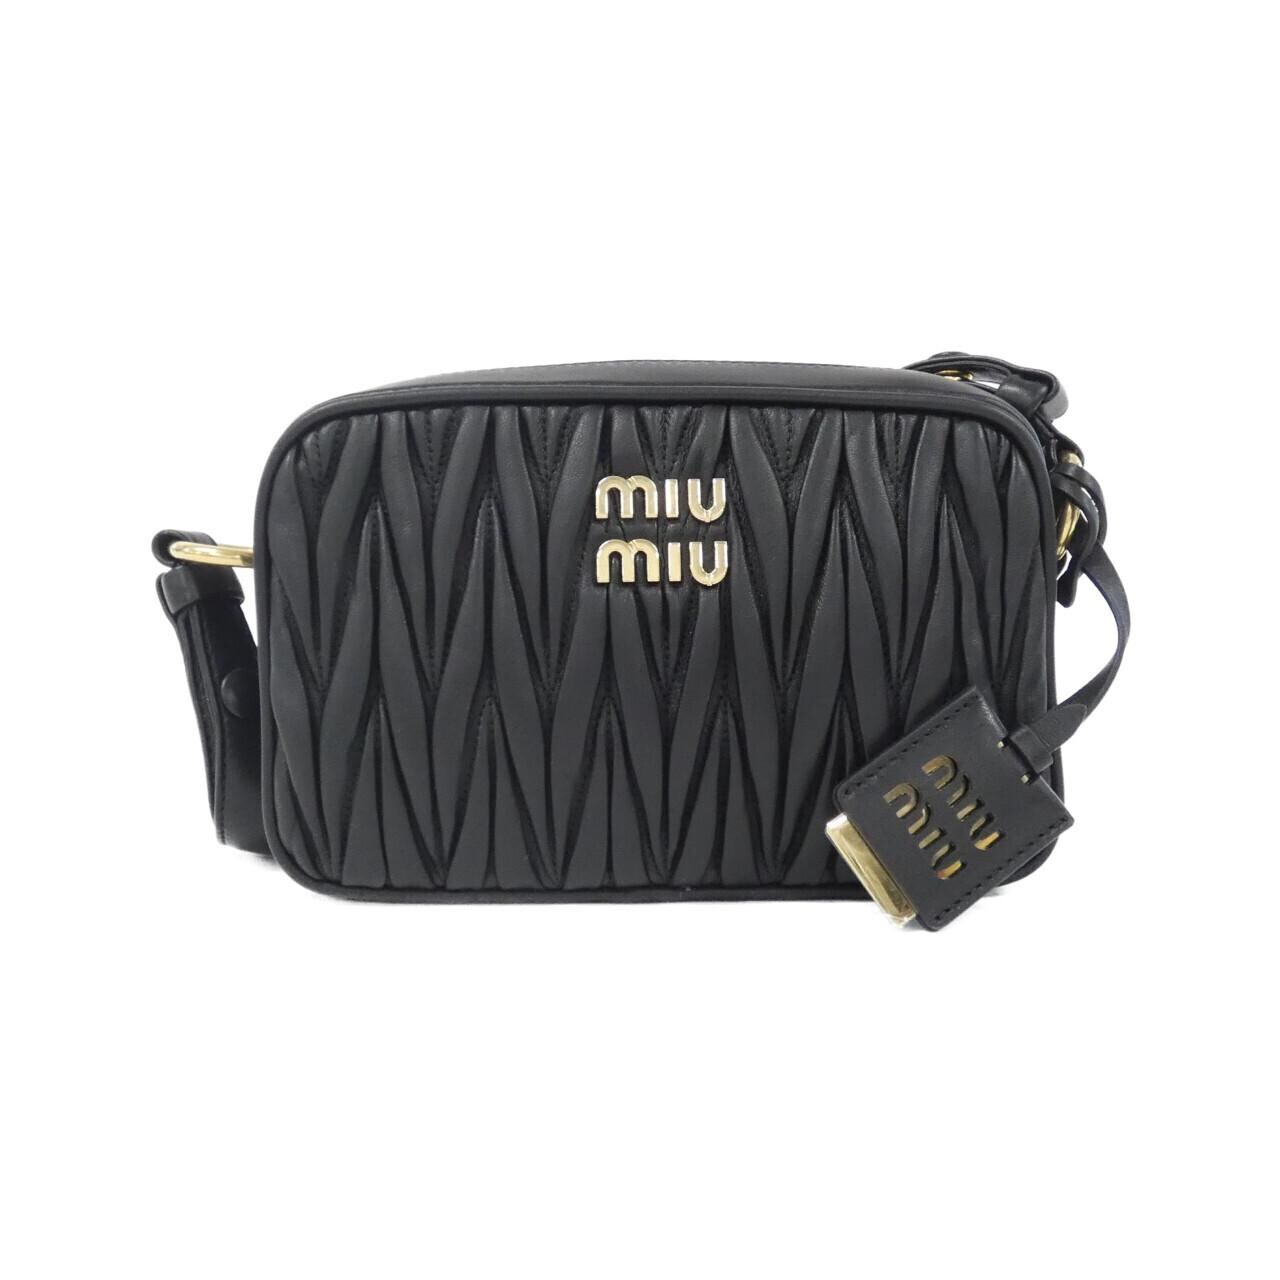 KOMEHYO|[BRAND NEW] MIU MIU 5BH118 SHOULDER BAG|MIU MIU|Brand Bag 